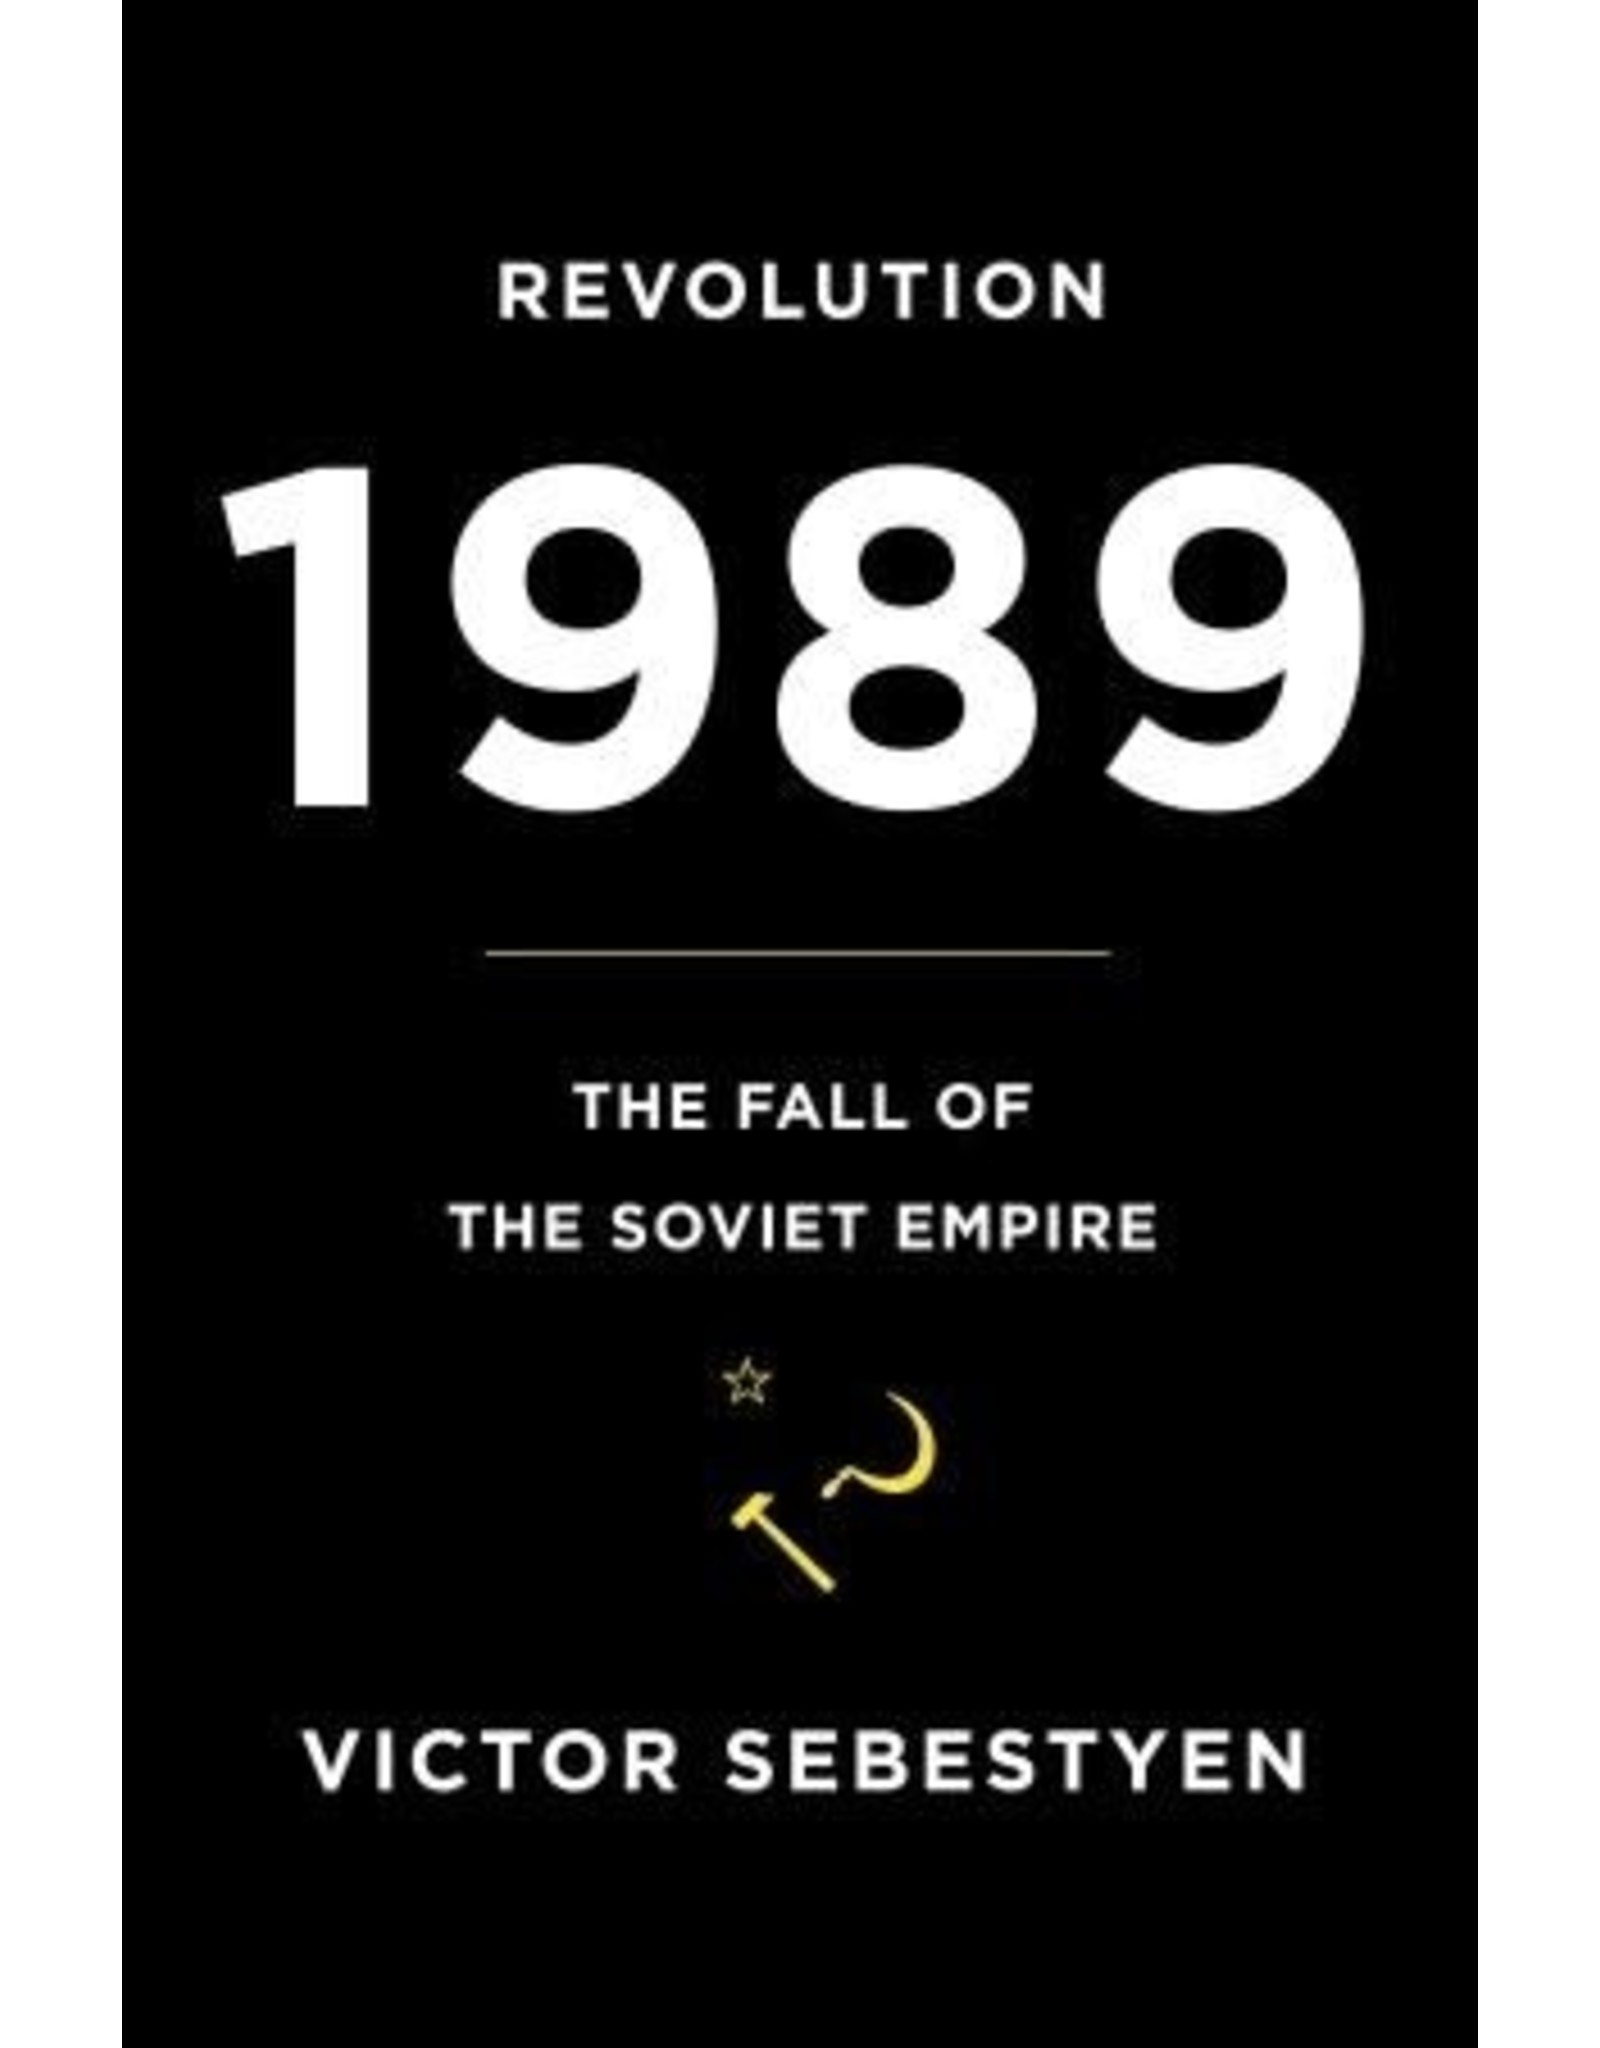 Revolution 1989: The Fall of the Soviet Empire